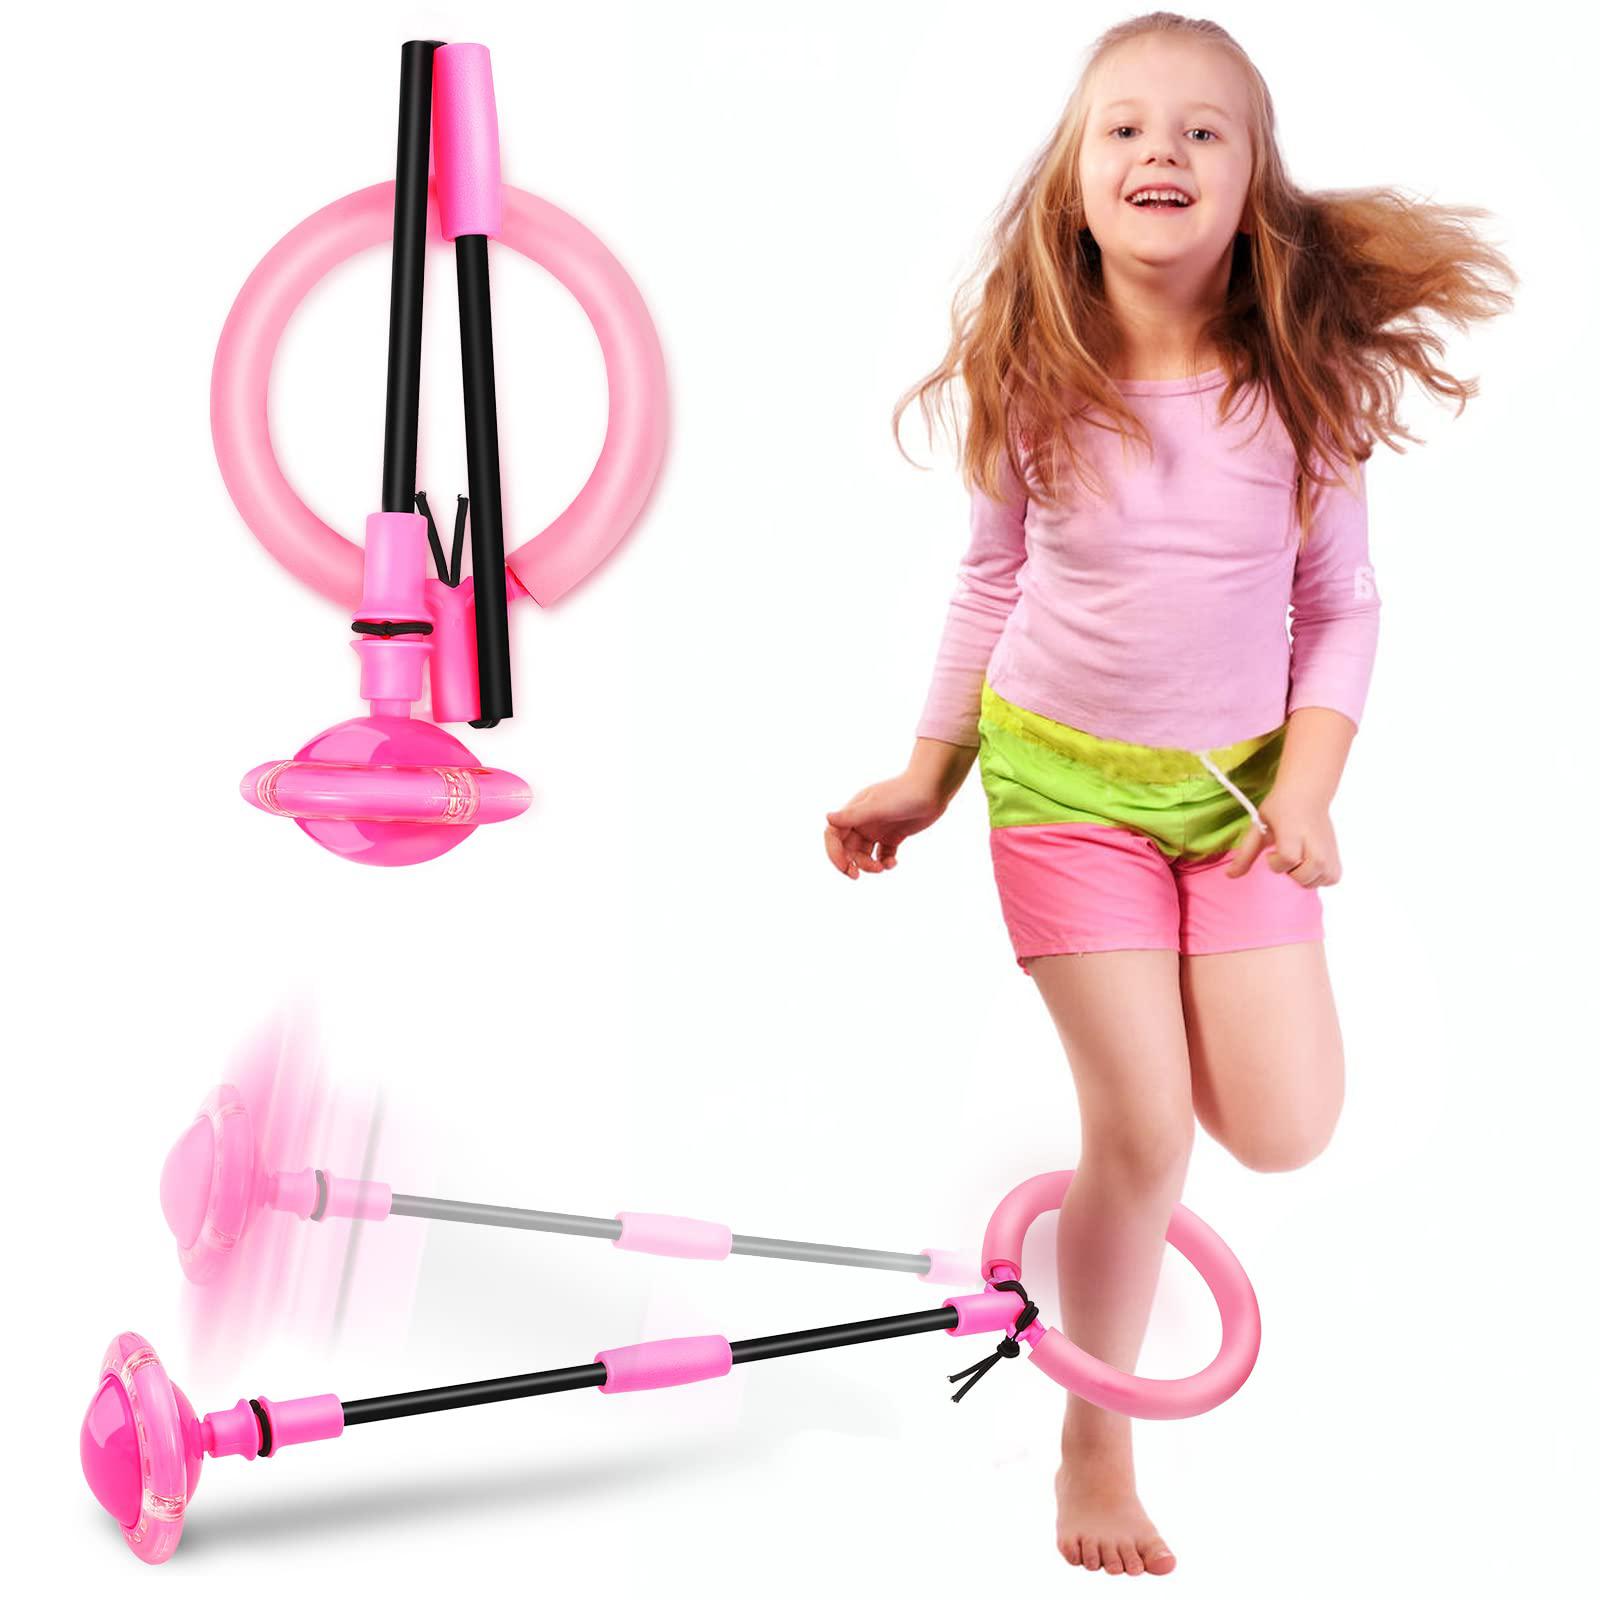 hewog skip ball, portable foldable colorful flash wheel swing ball